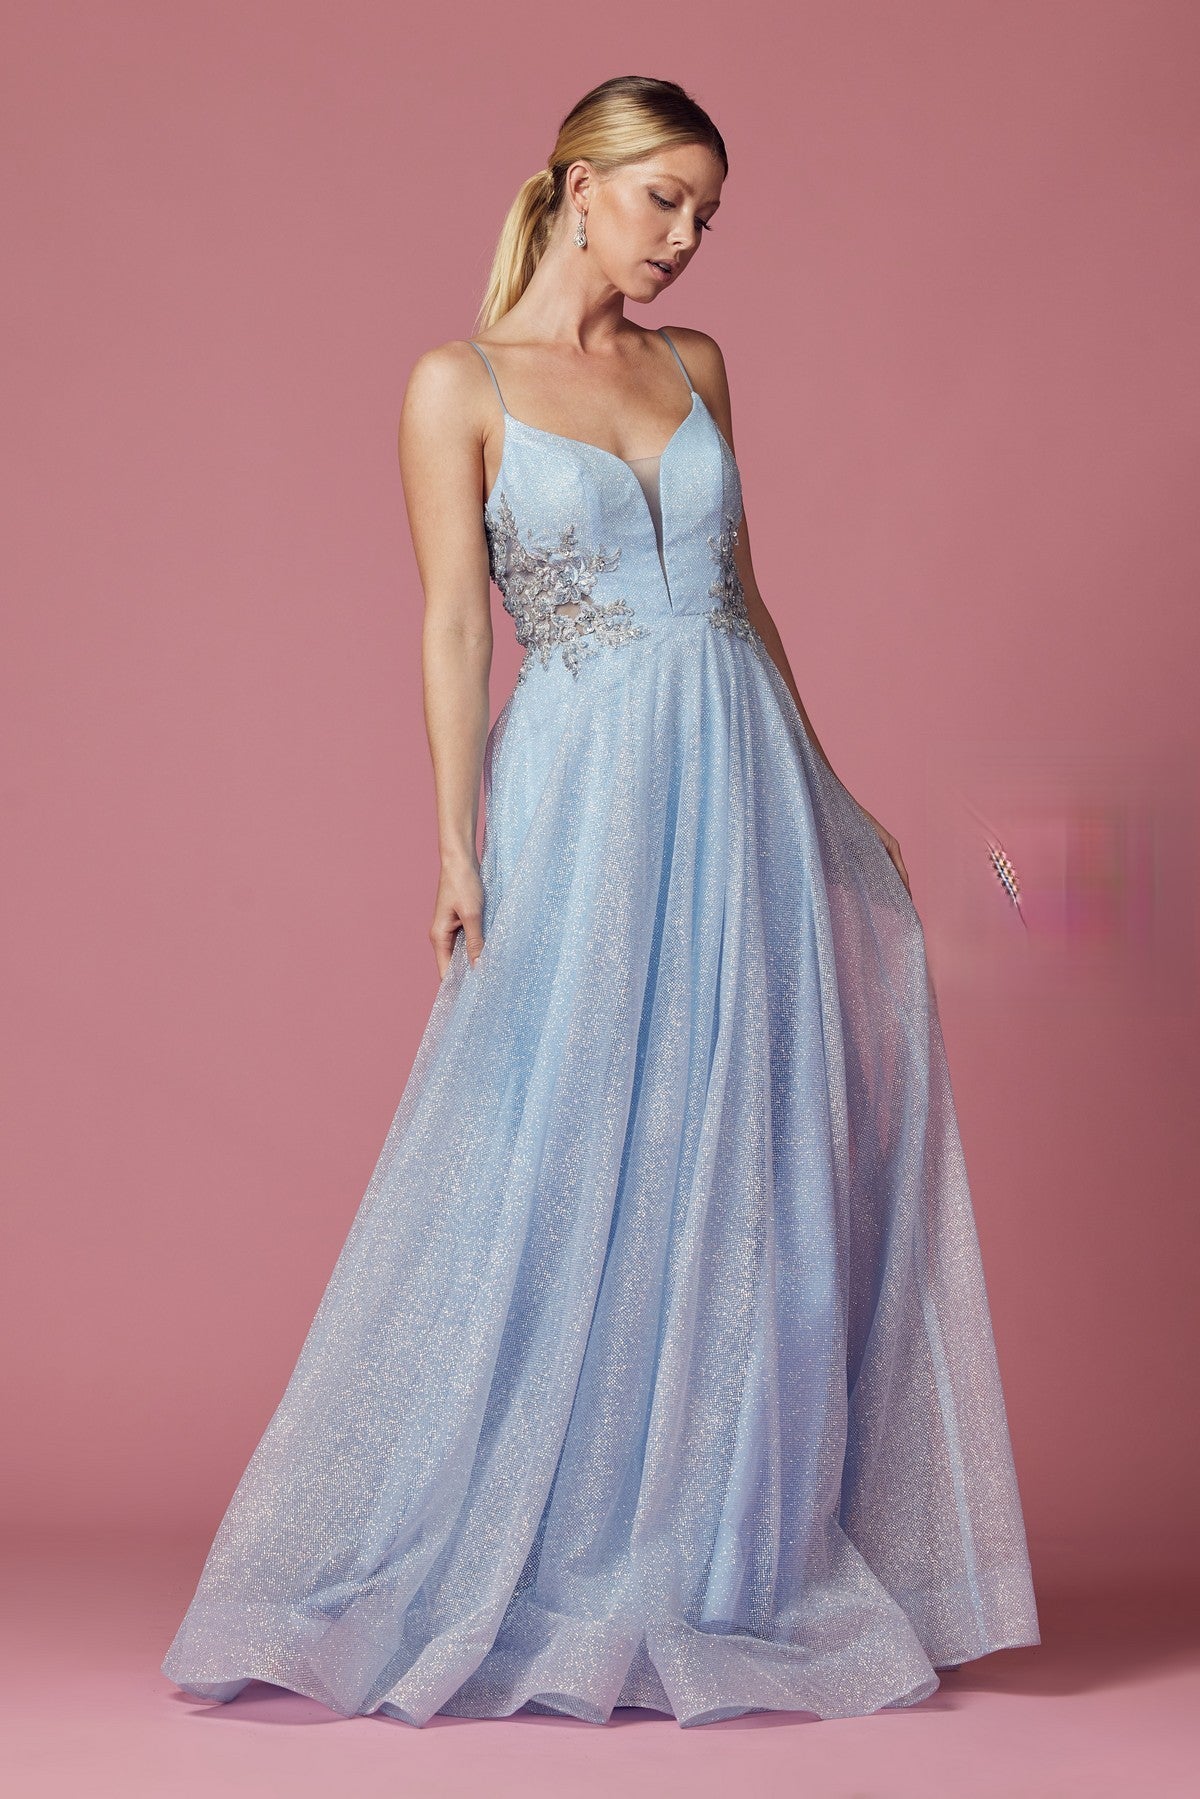 Embellished Glitter Illusion V-Neck Long Prom Dress NXT1033-Prom Dress-smcfashion.com